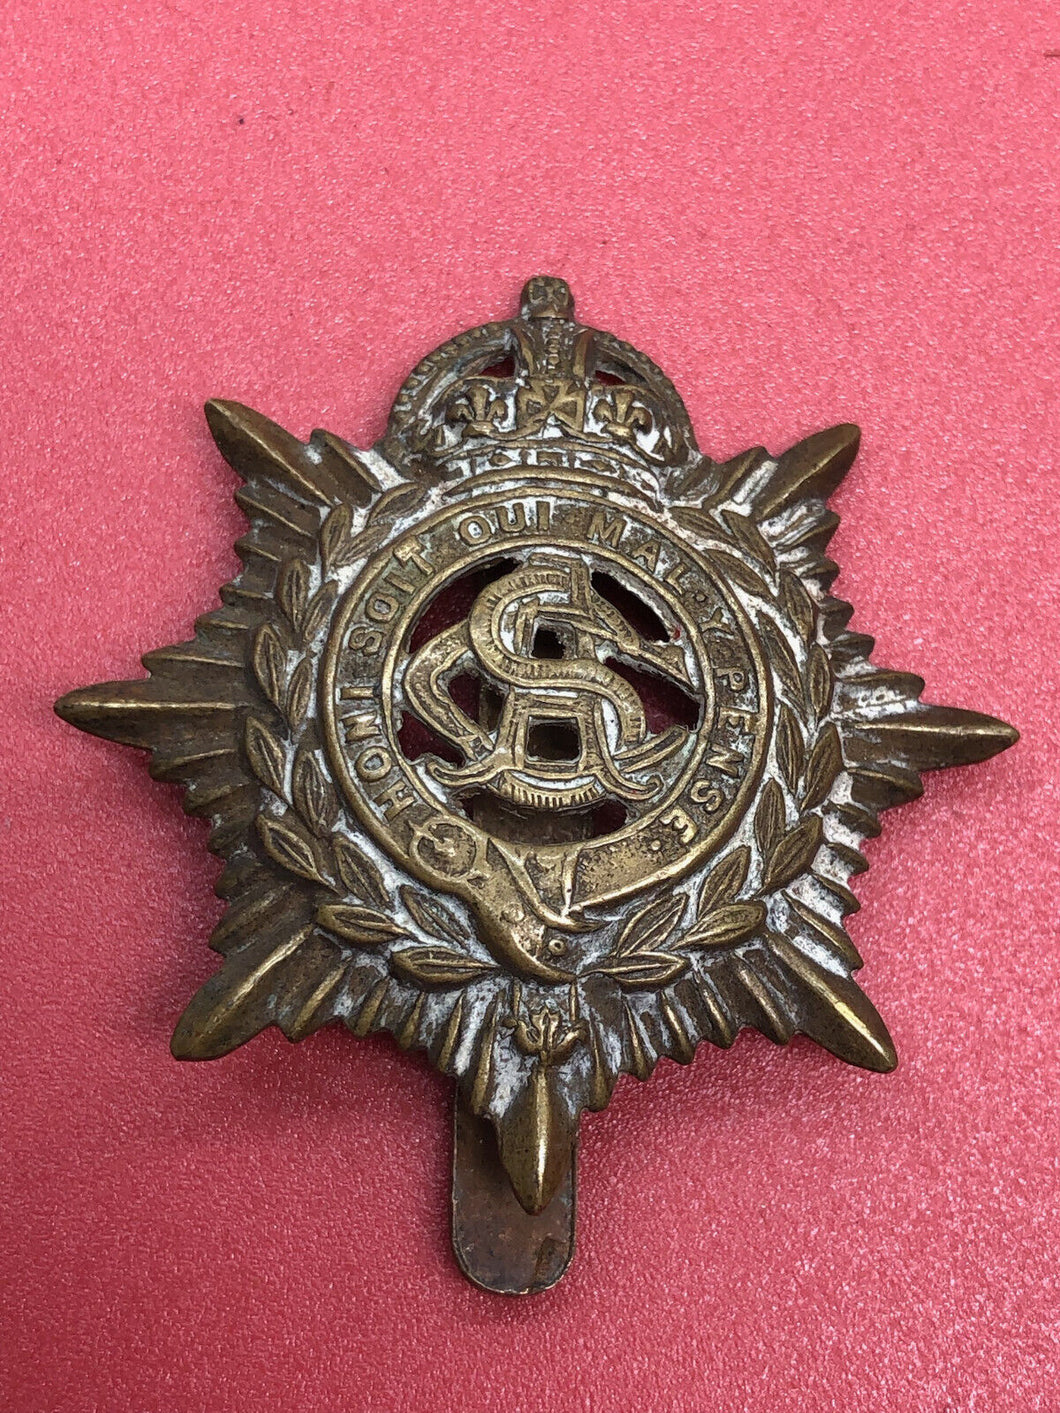 Original WW1 British Army Cap Badge - Royal Army Service Corps RASC